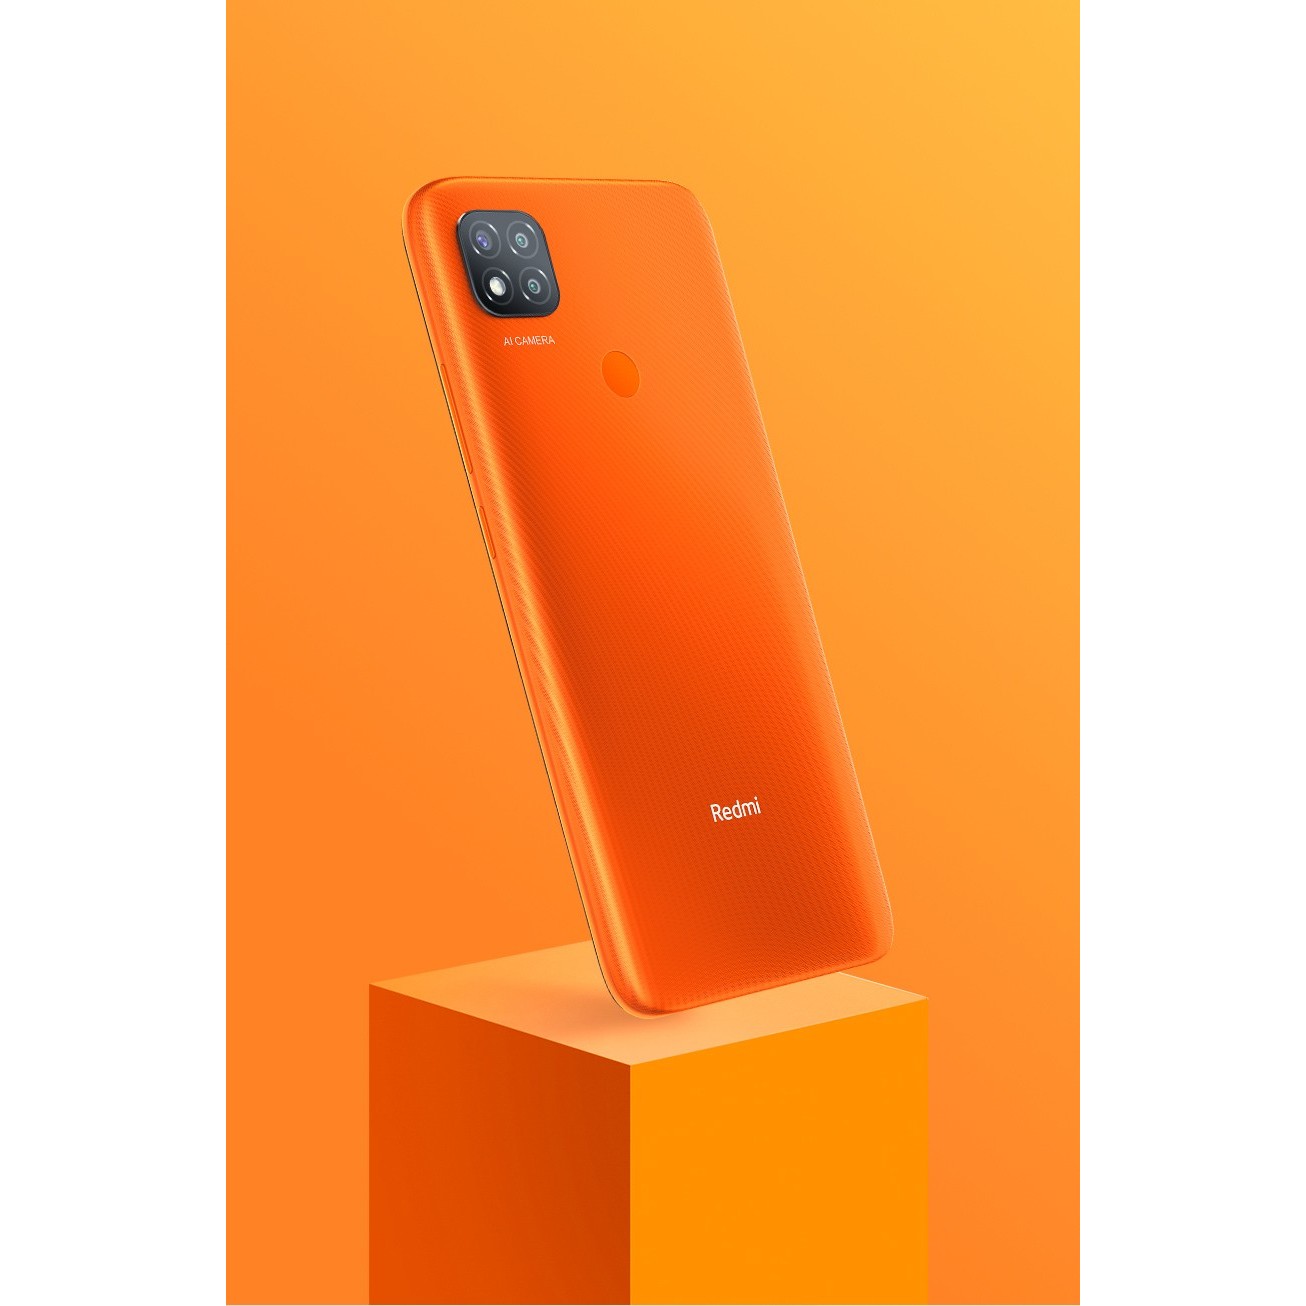 Xiaomi Redmi 9c 64gb Оранжевый